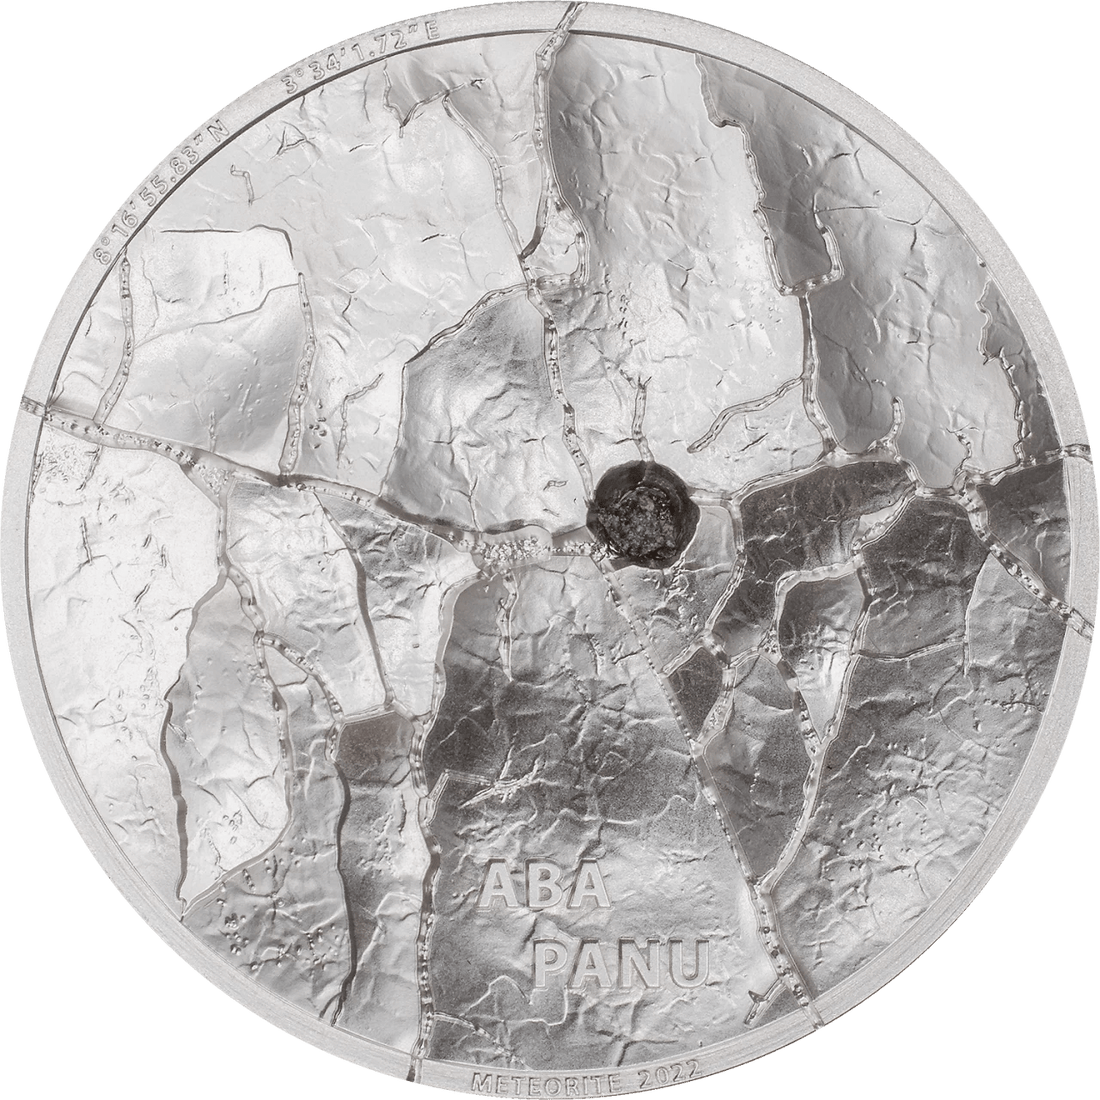 2022 1 oz Silver ABA PANU METEORITE Coin - Metorites Series Cook Islands - OZB